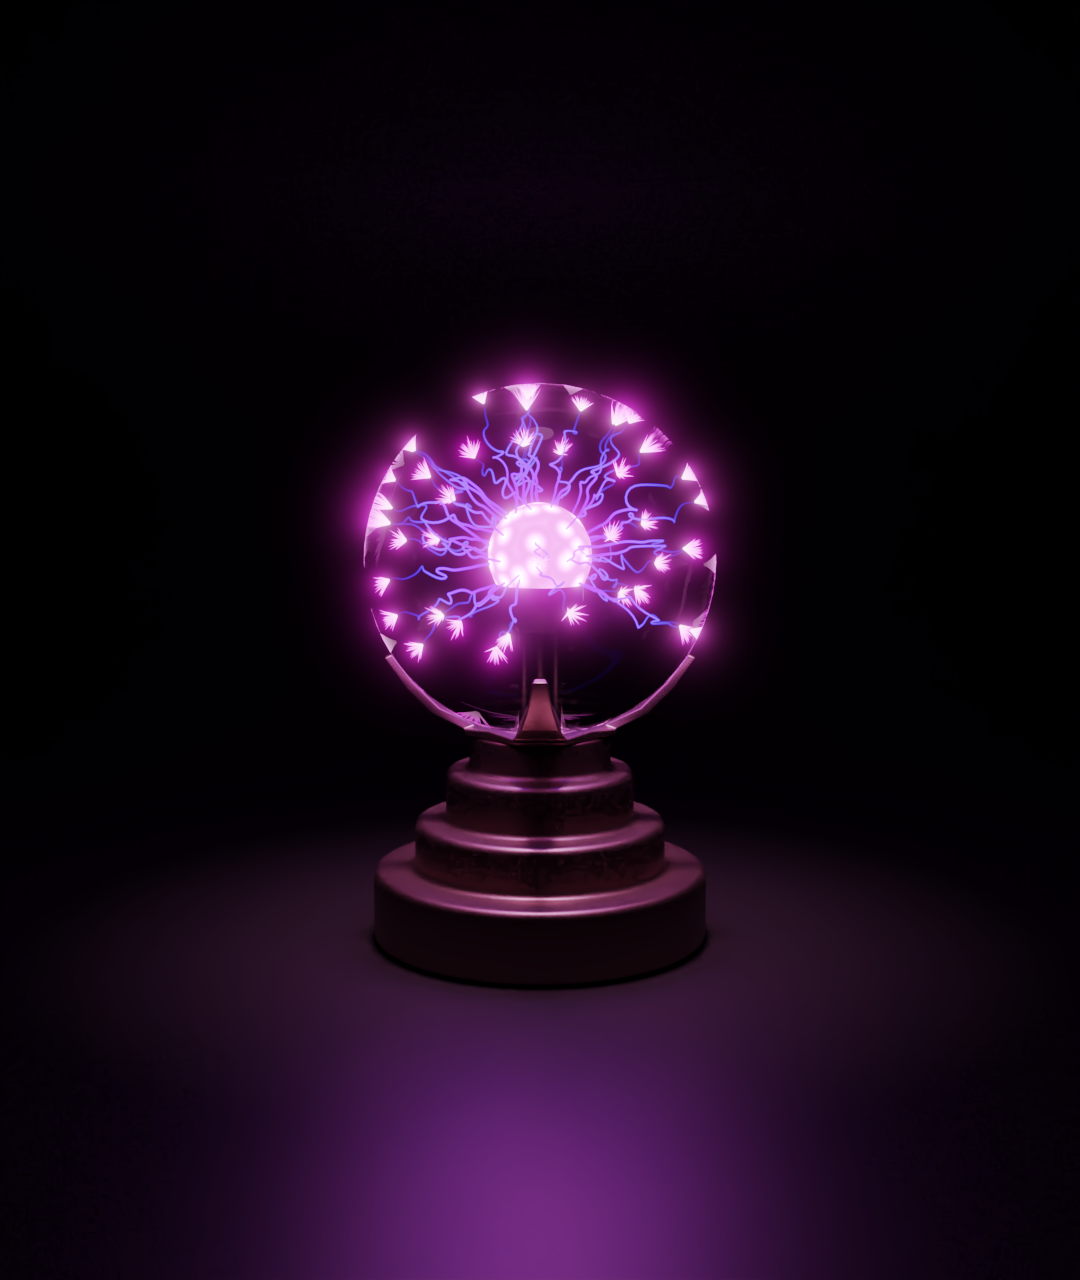 Plasma Ball preview image 1